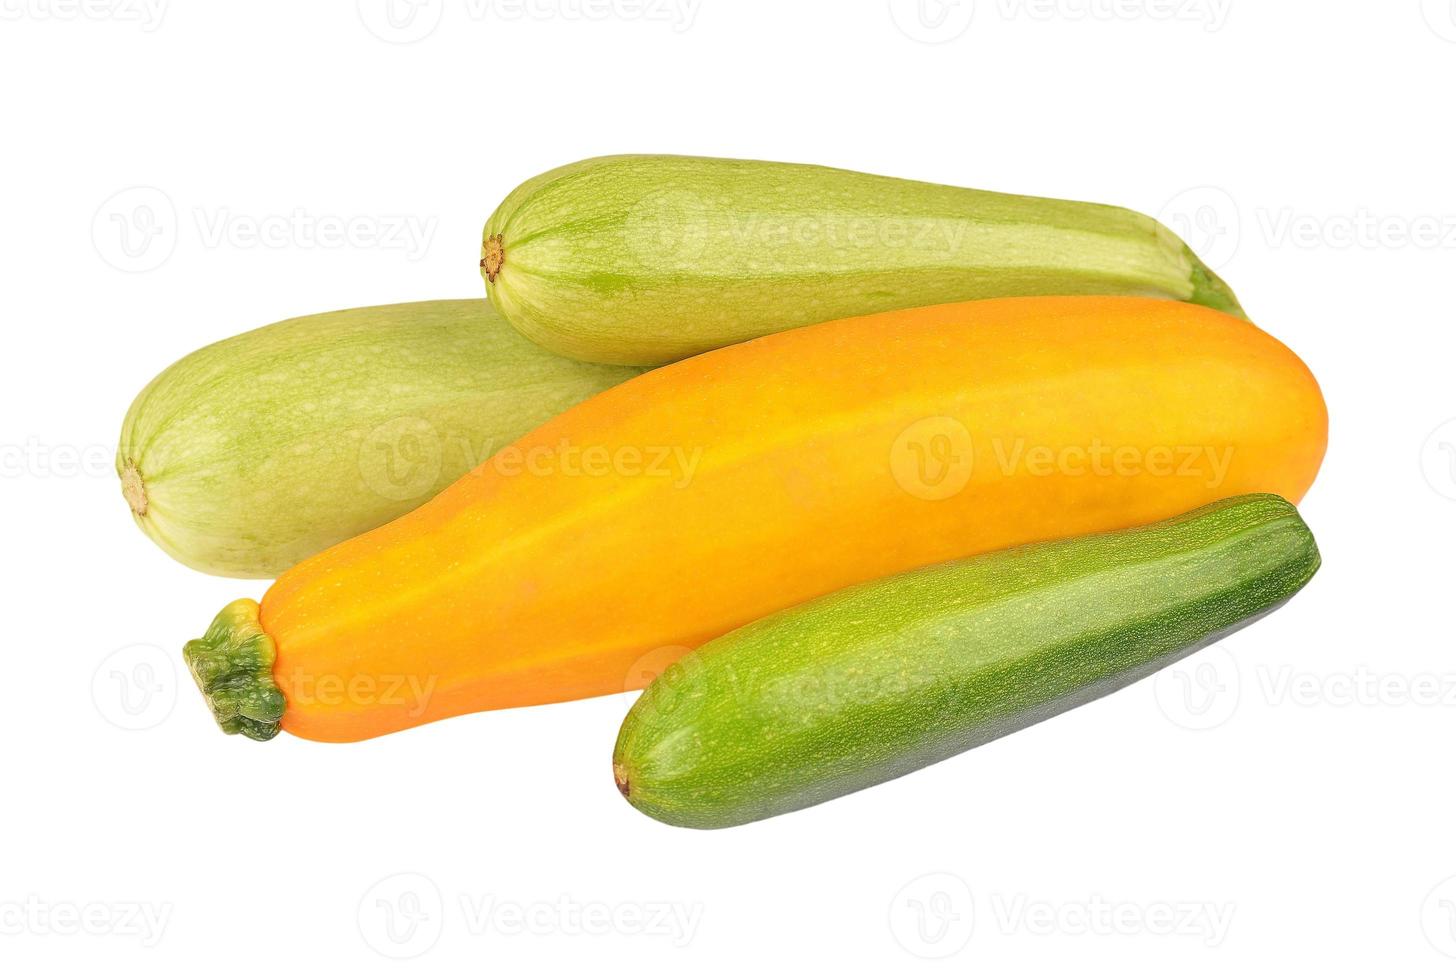 grönsaksmärg (zucchini) foto